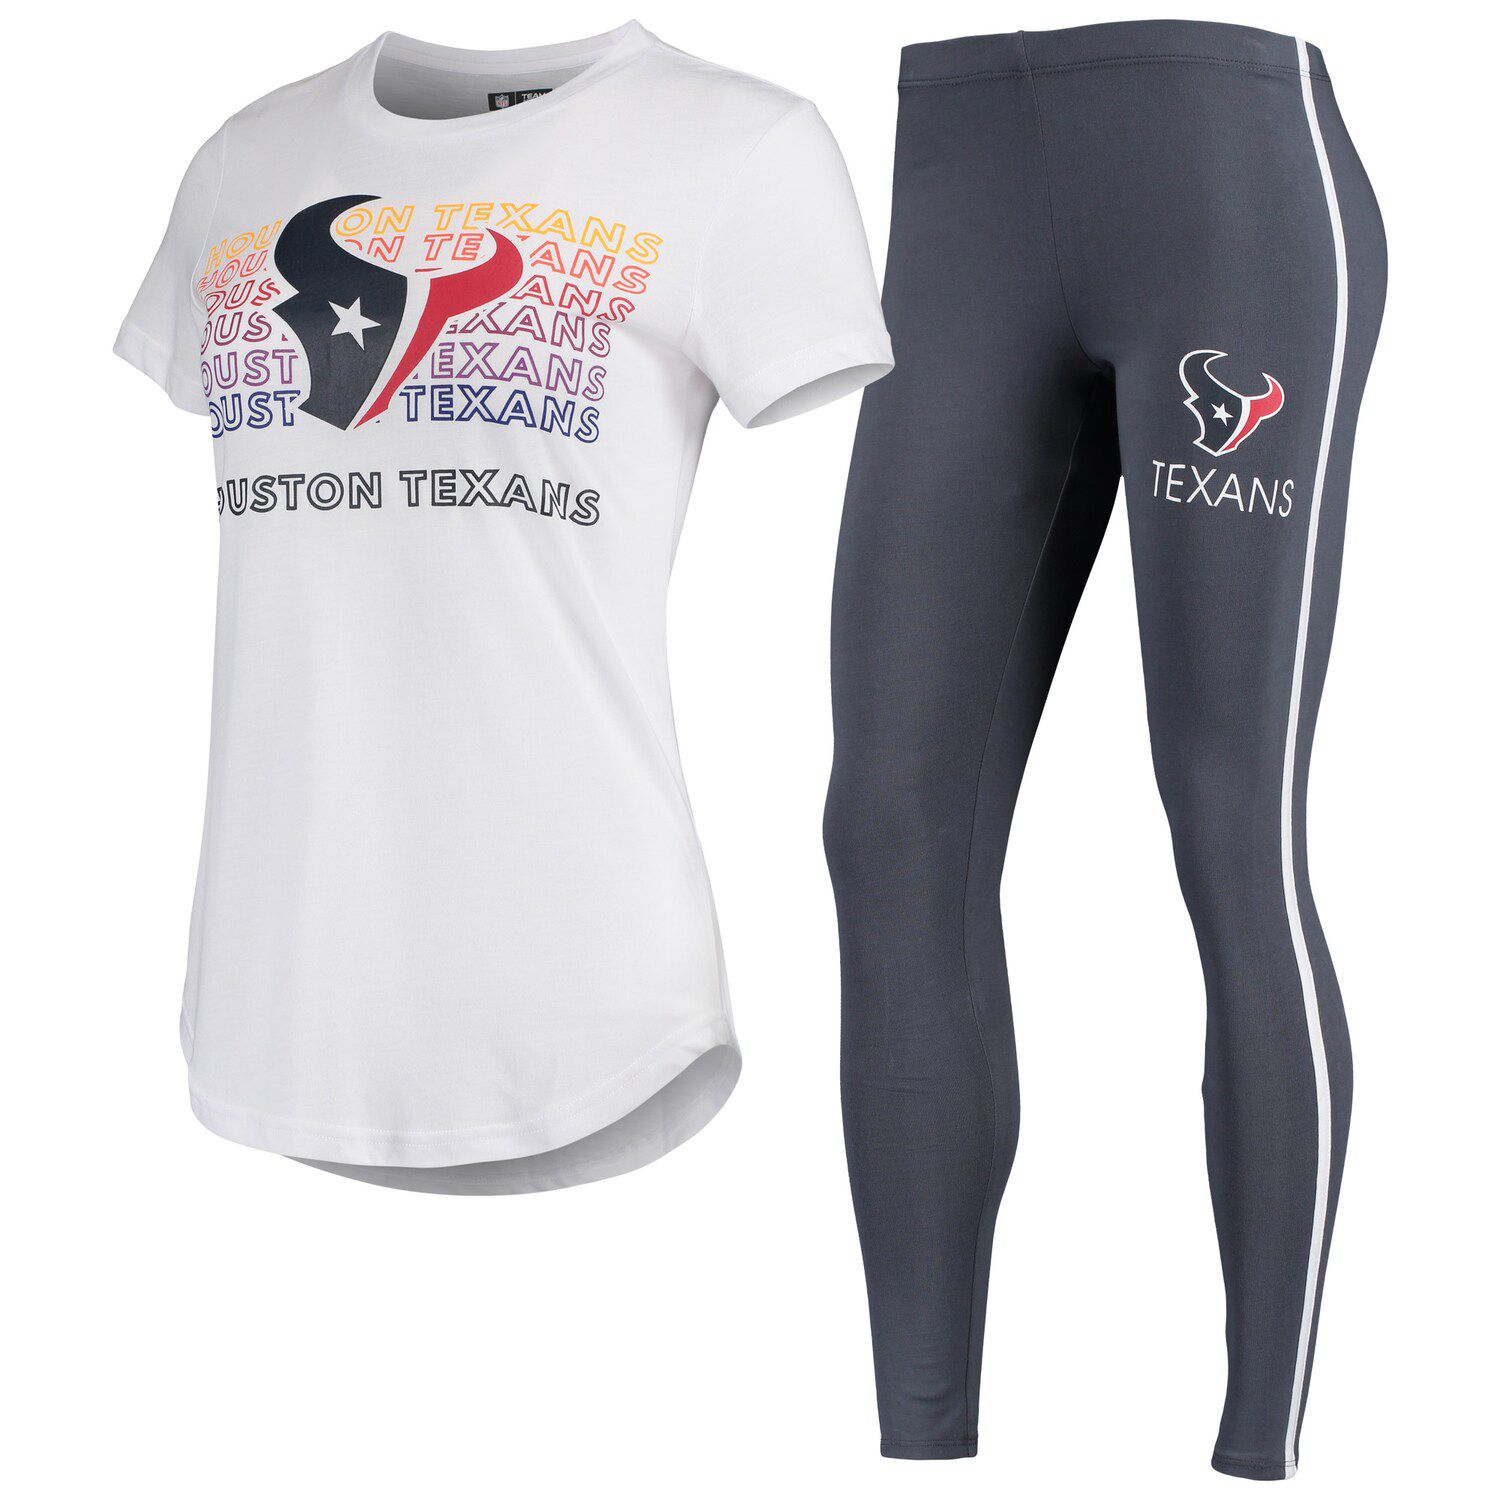 Image for Unbranded Women's Concepts Sport White/Charcoal Houston Texans Sonata T-Shirt & Leggings Set at Kohl's.